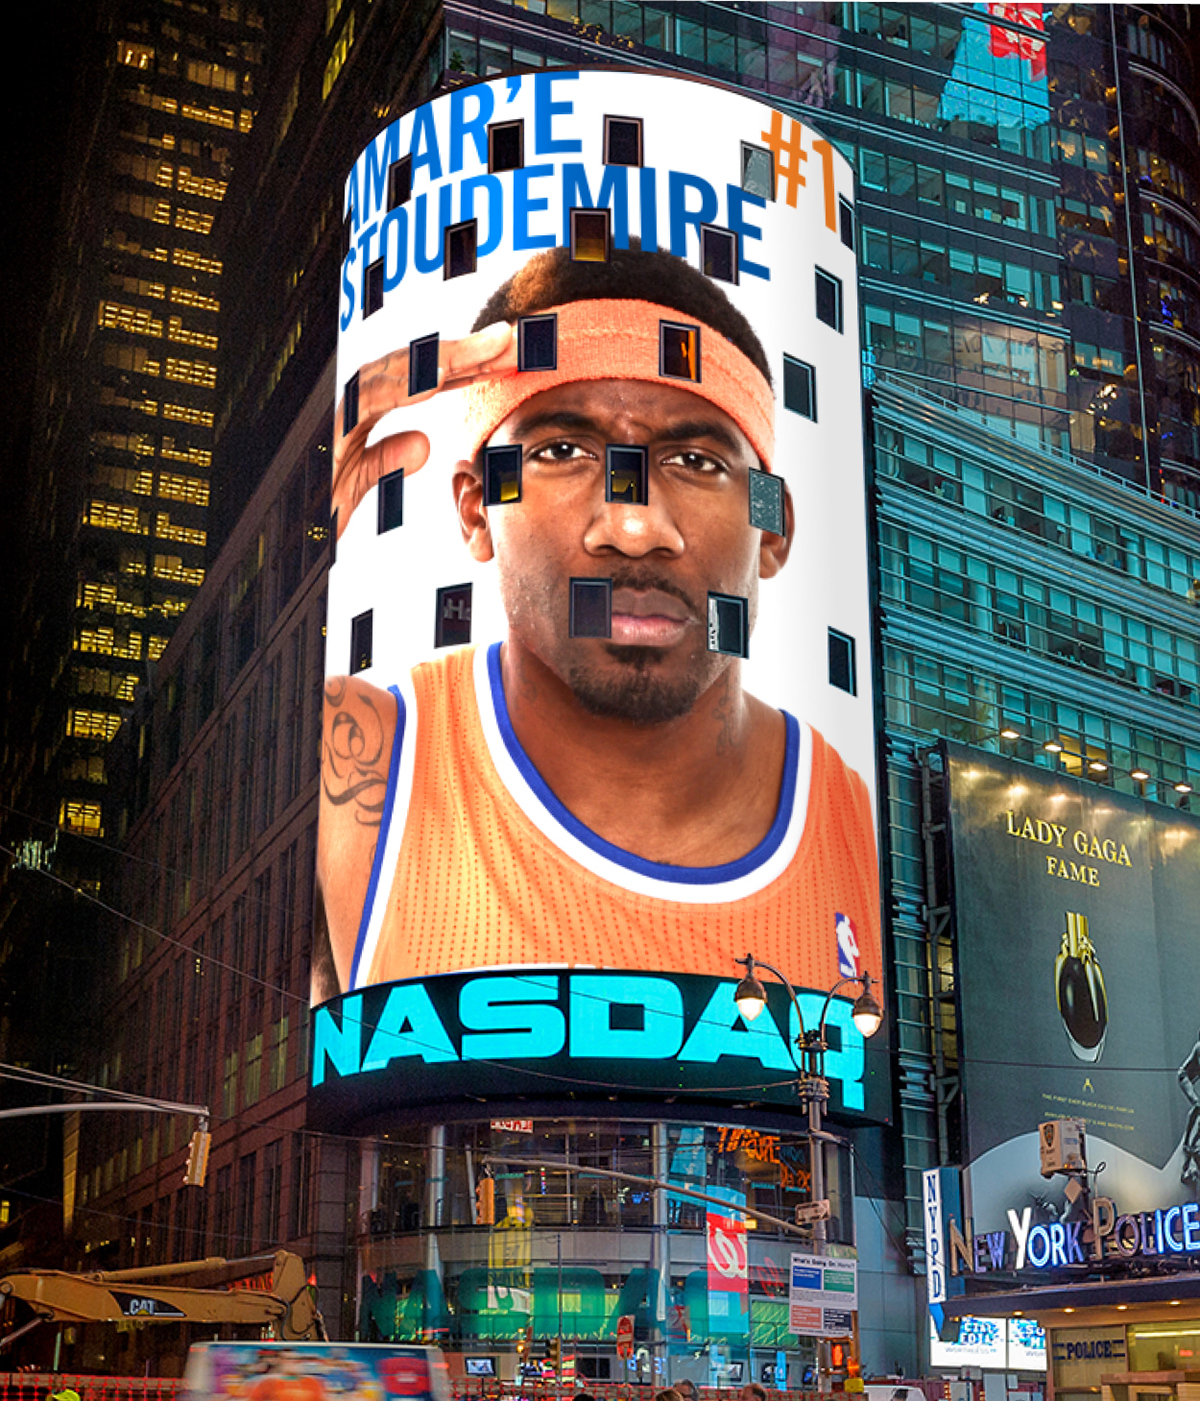 The KnIcks NBA new york knicks Knicks basketball